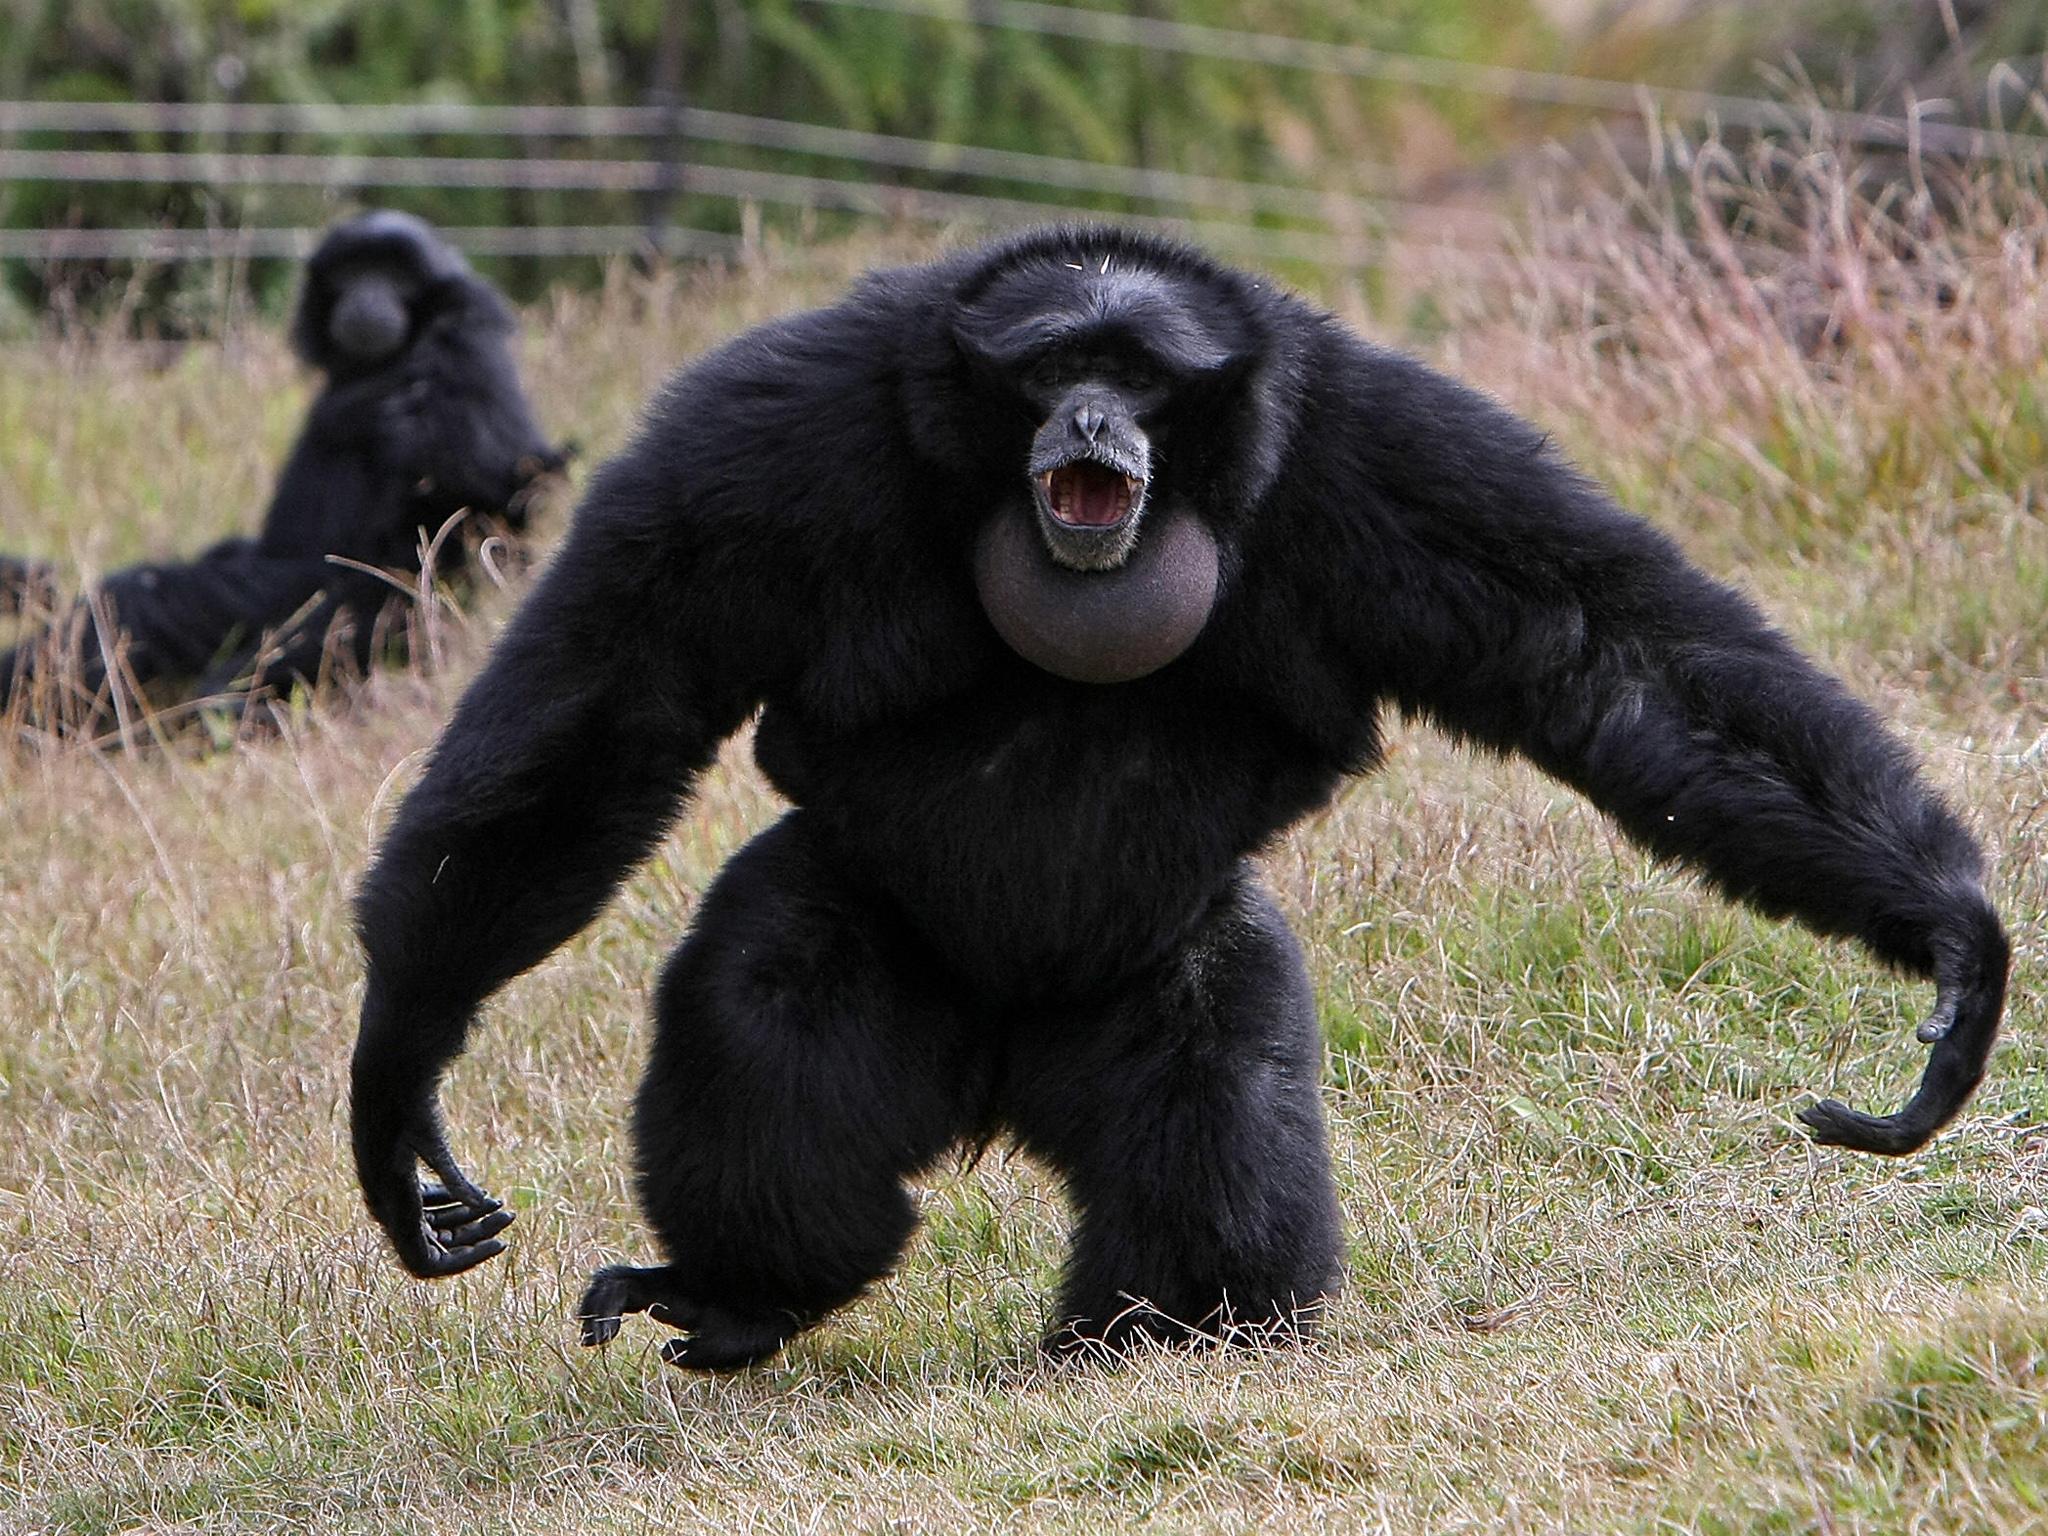 A male siamang inflates his throat sac to ward off predators